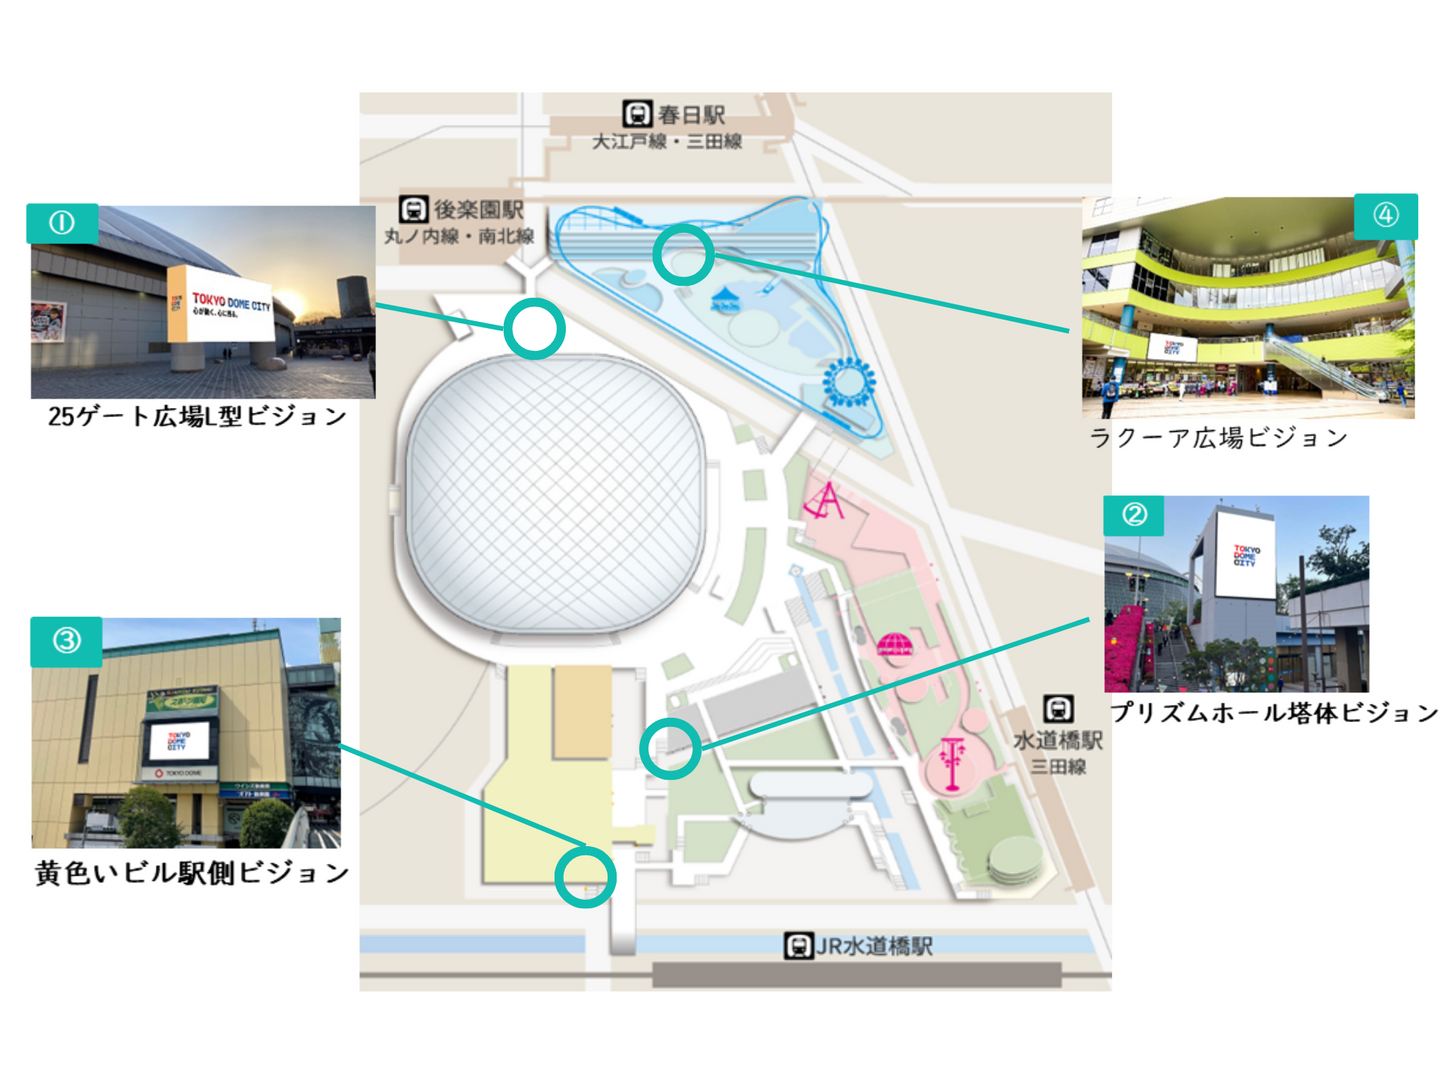 東京圓頂城市幻象基本套裝開放25 Gate Square L Vision